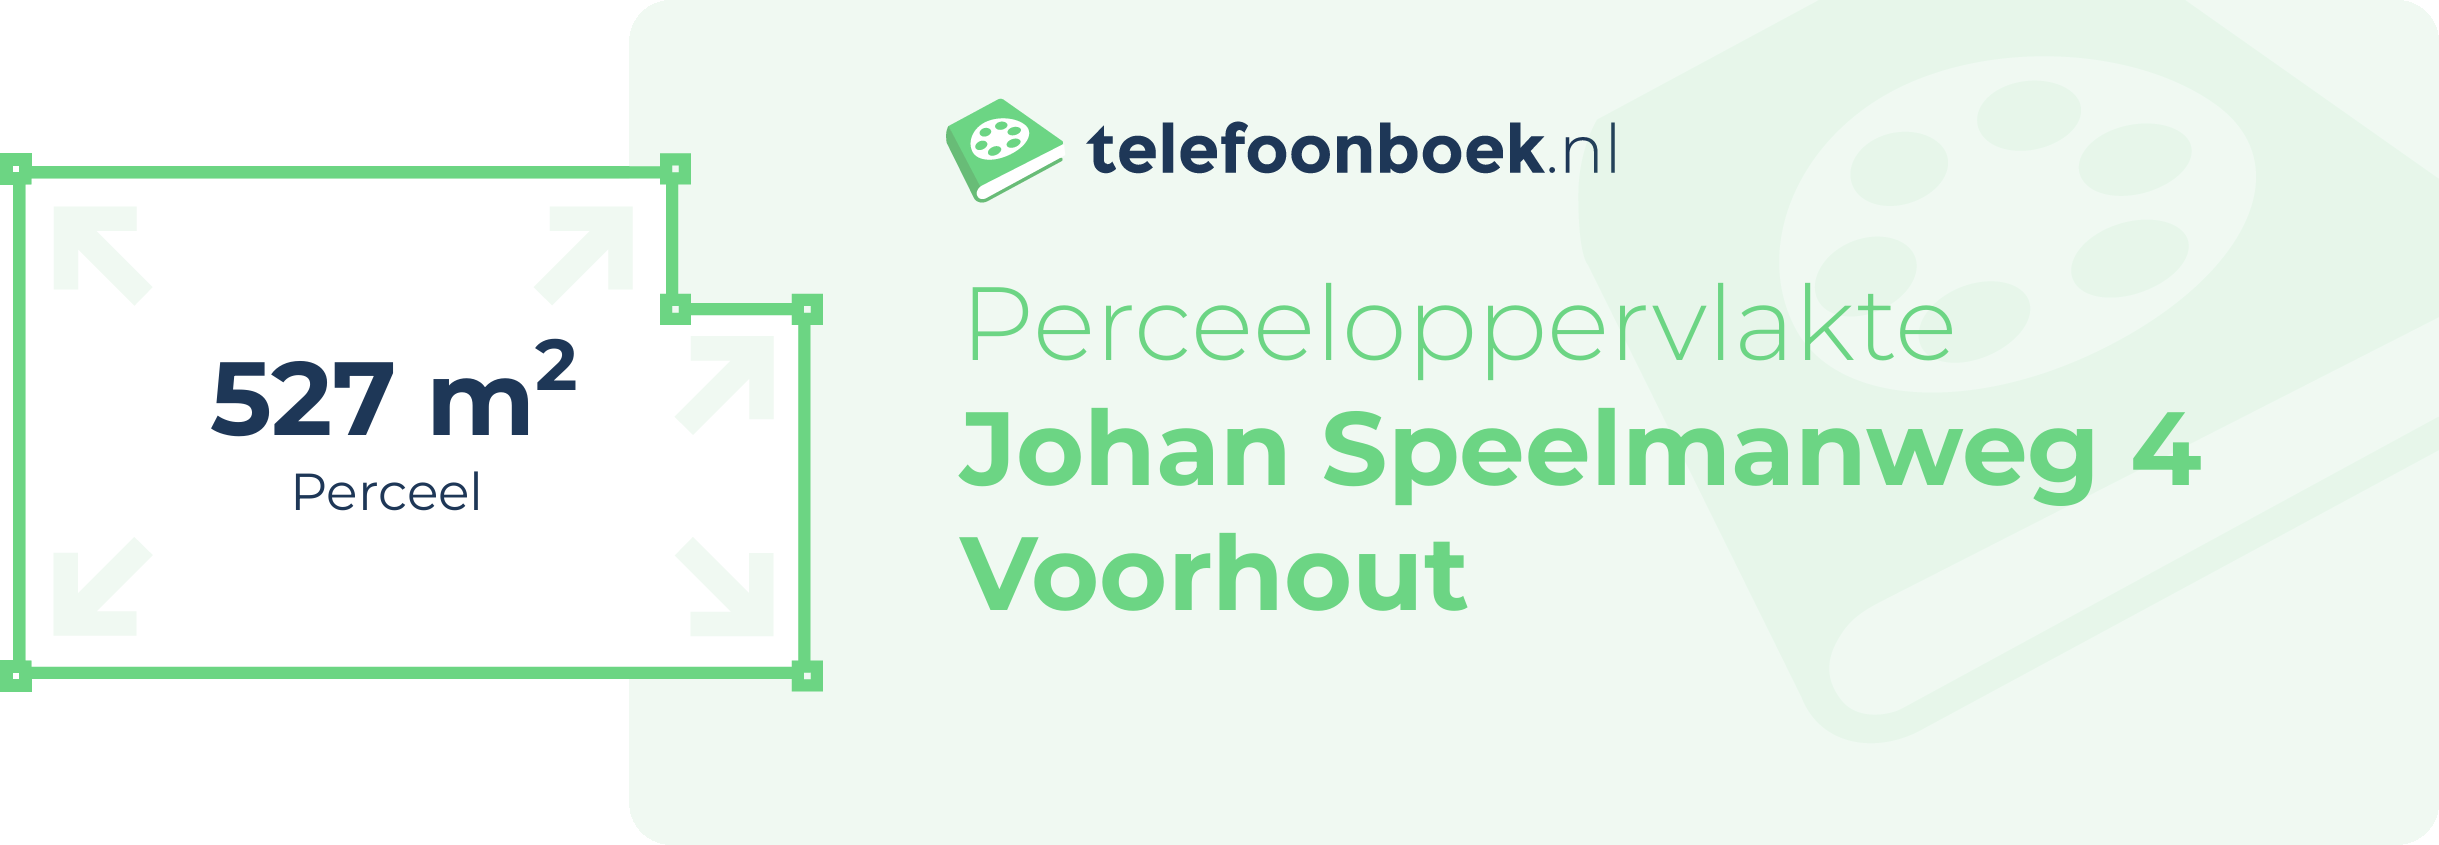 Perceeloppervlakte Johan Speelmanweg 4 Voorhout